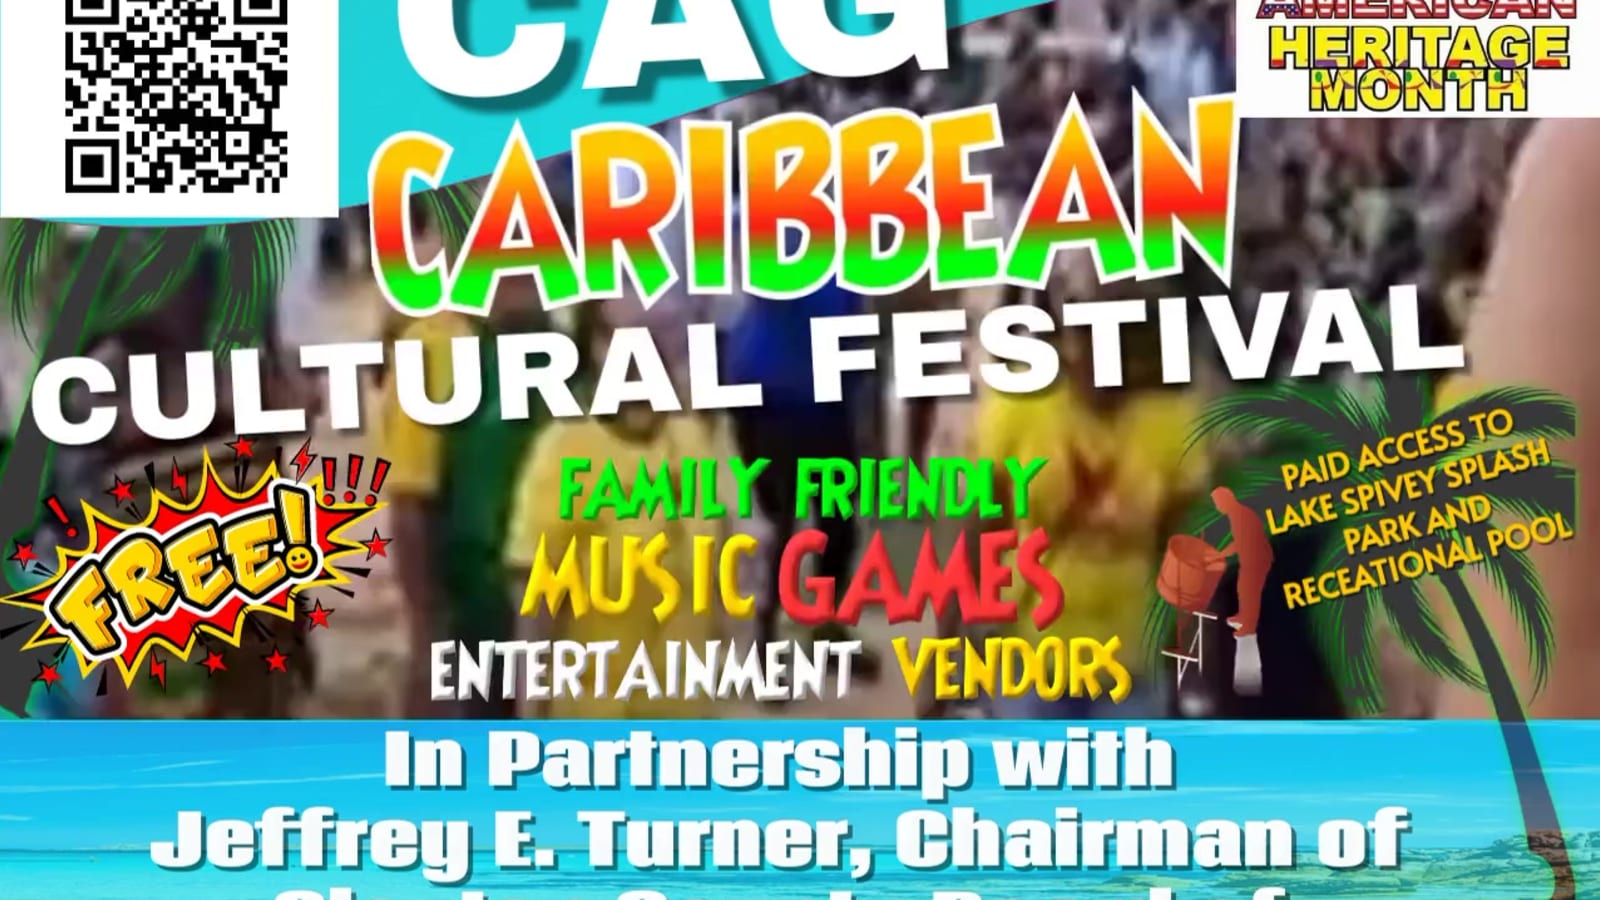 CAG Caribbean Cultural Festival